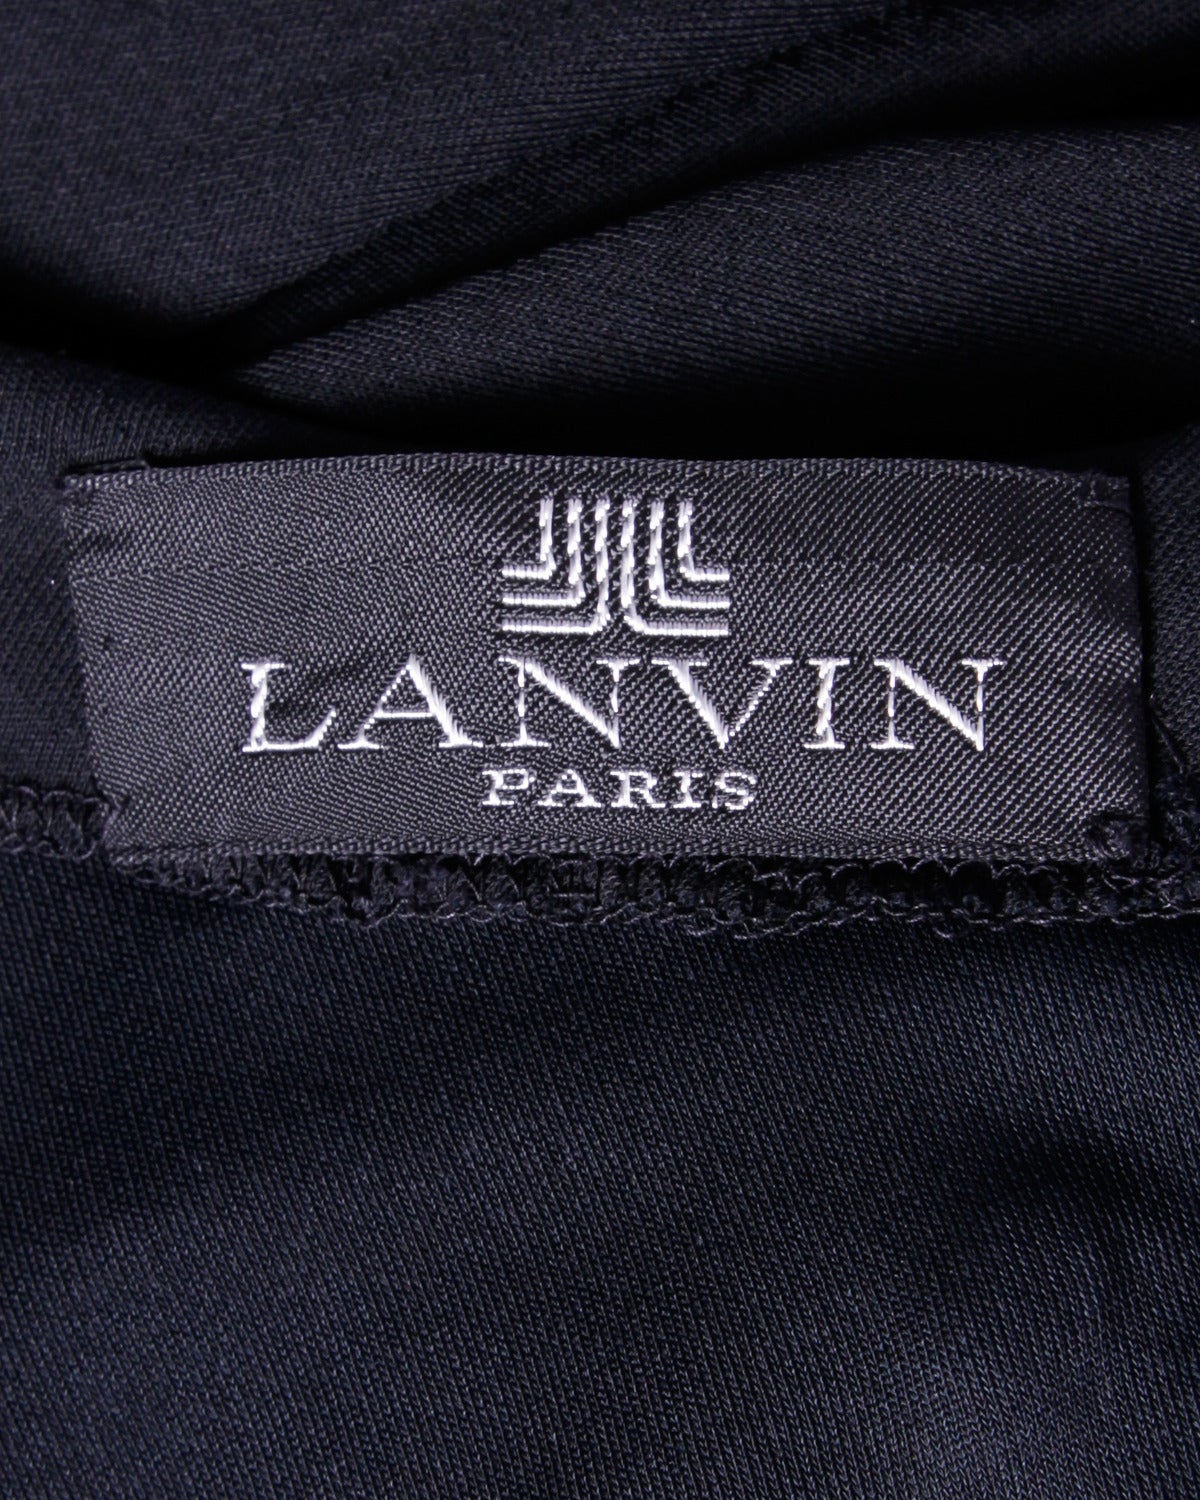 Women's Lanvin Black Label Vintage 1970s 70s Op Art Geometric Print Maxi Dress